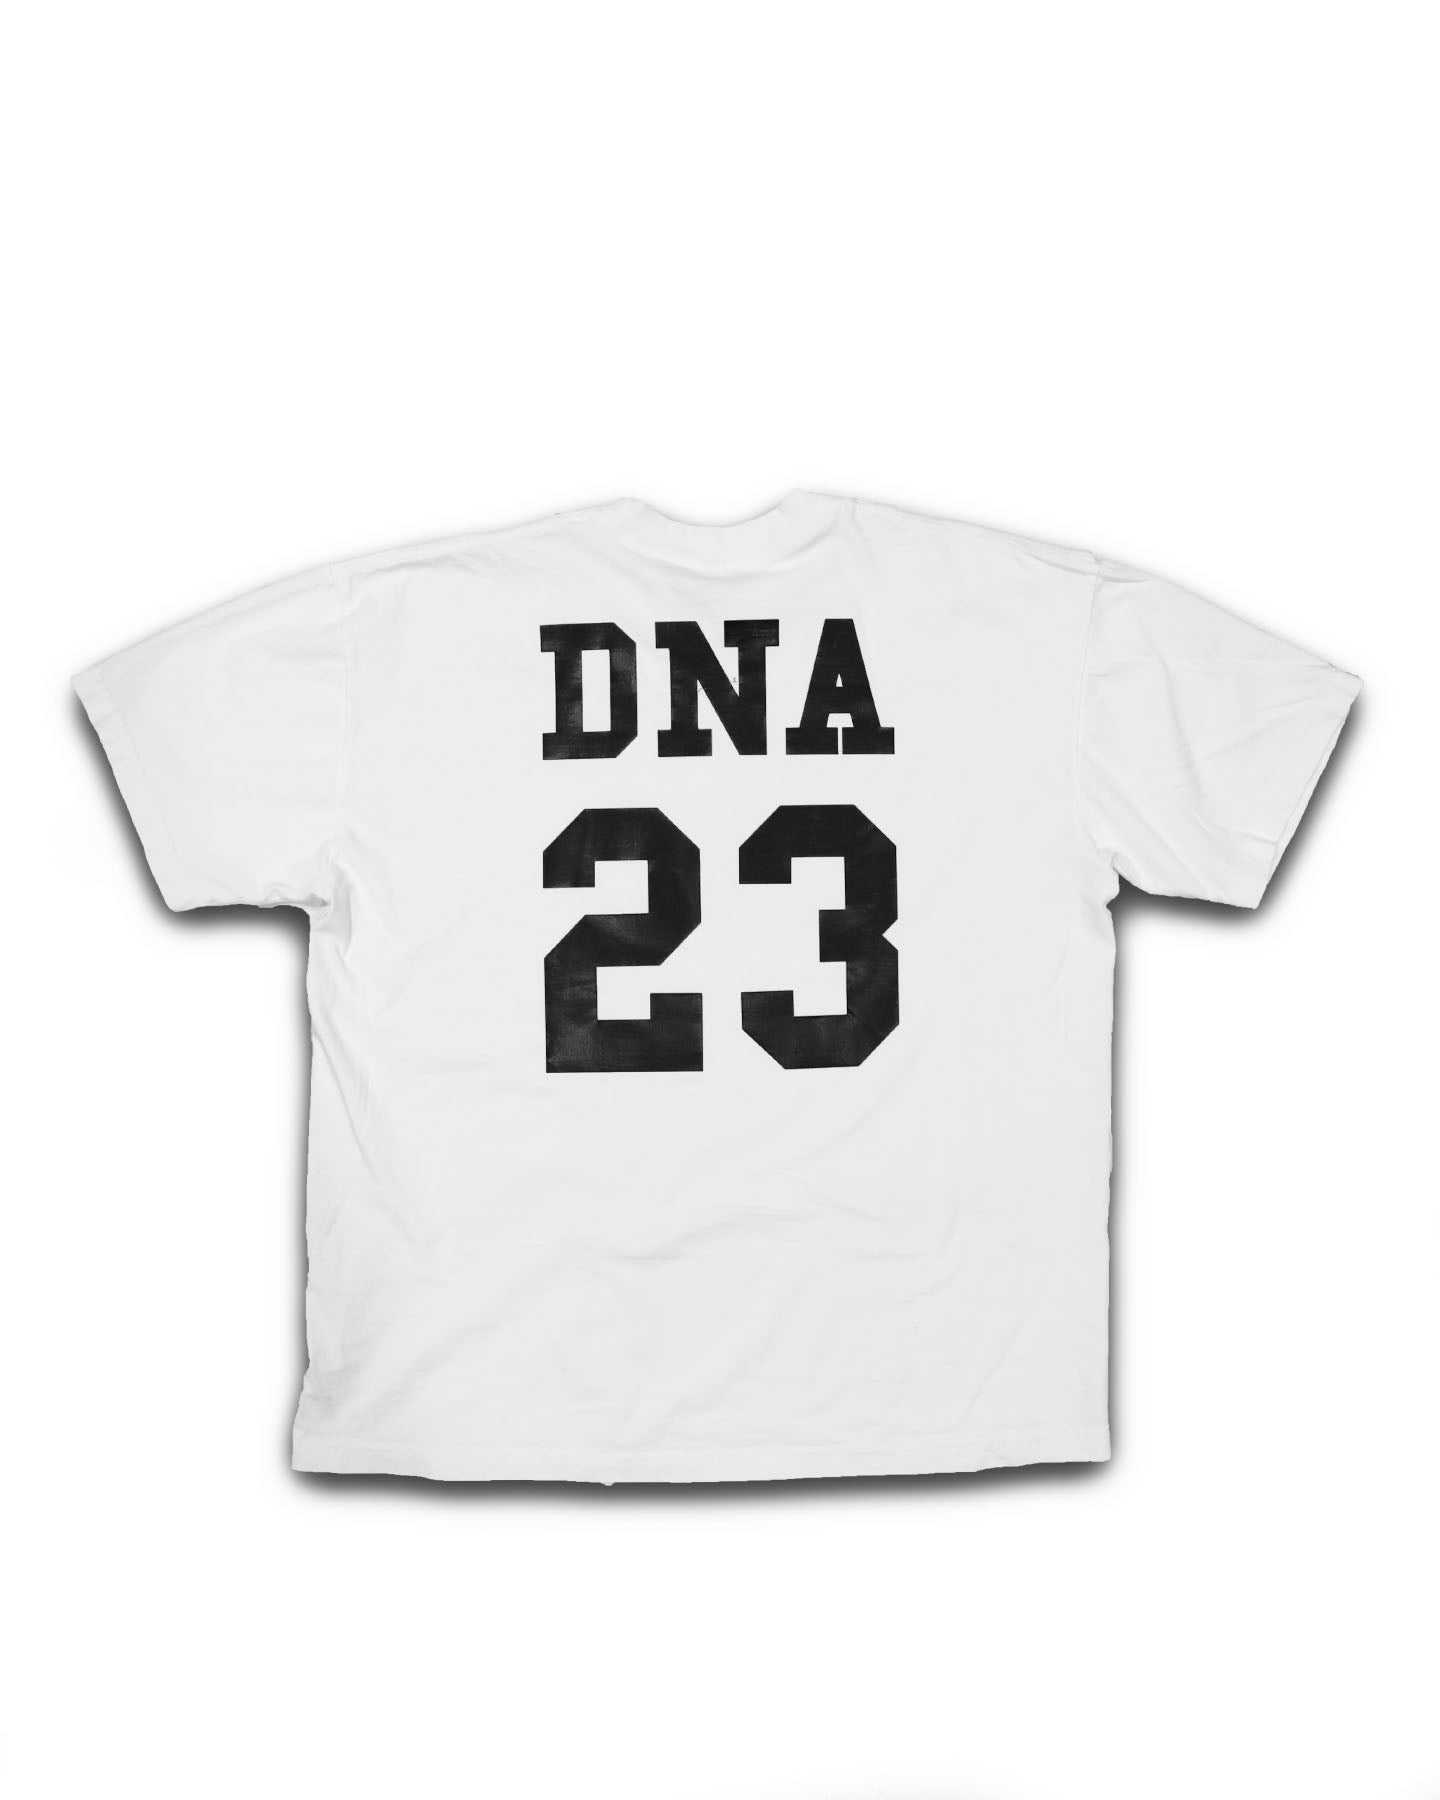 SNEAKER DEPT. PORTLAND - WHITE TEE (DNA 23)